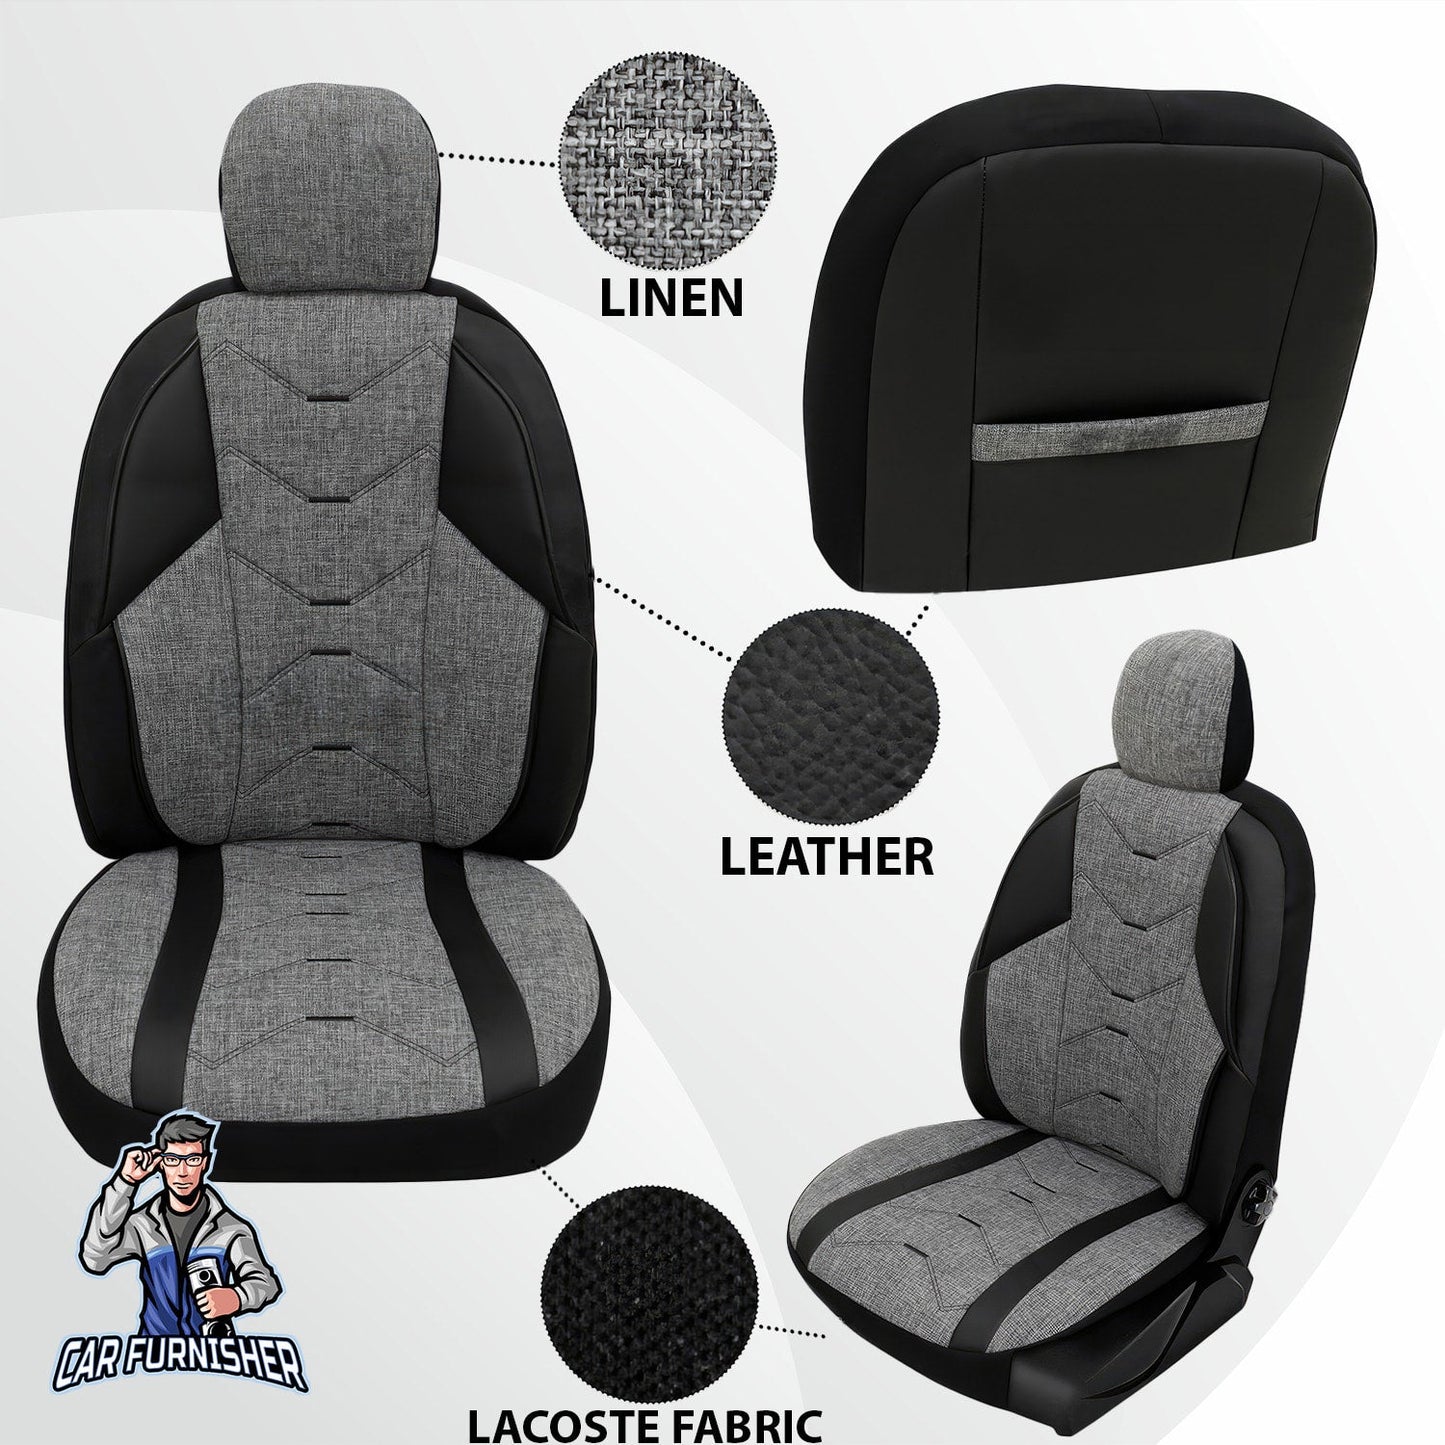 Mercedes 190 Seat Covers Verita Elegance Design Gray 5 Seats + Headrests (Full Set) Leather & Linen Fabric